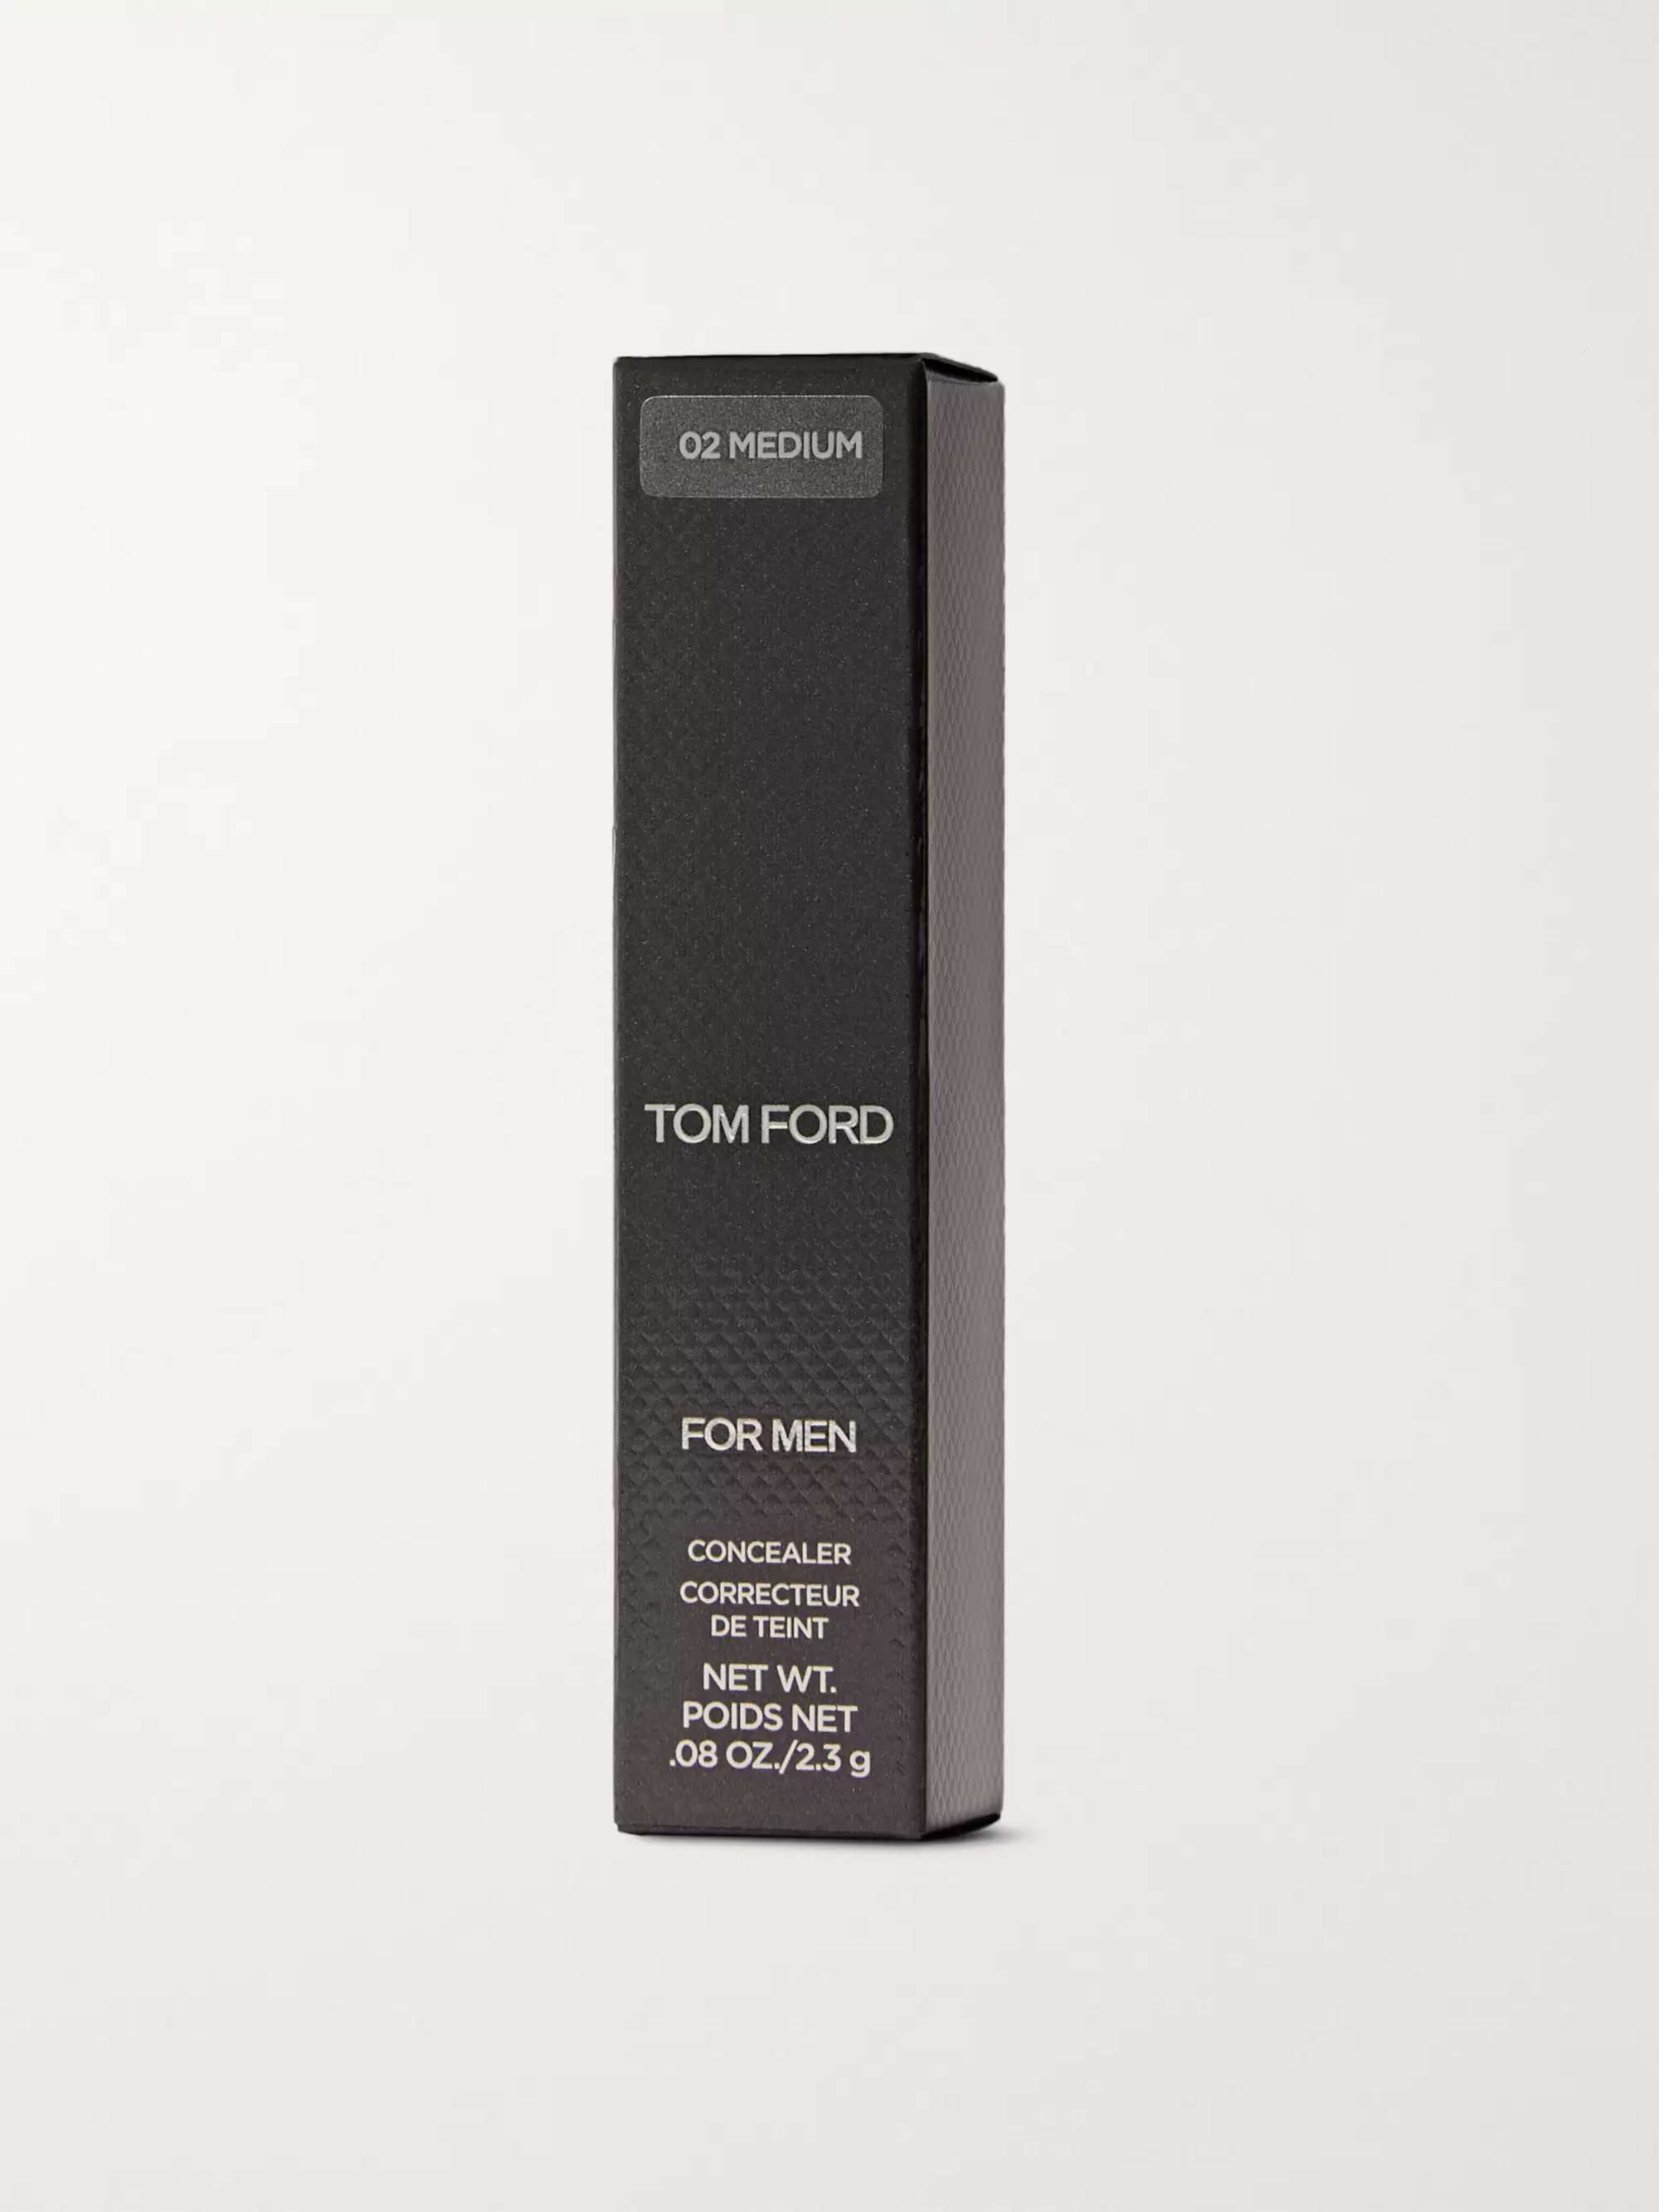 TOM FORD BEAUTY Concealer Stick - Medium, 2.3g